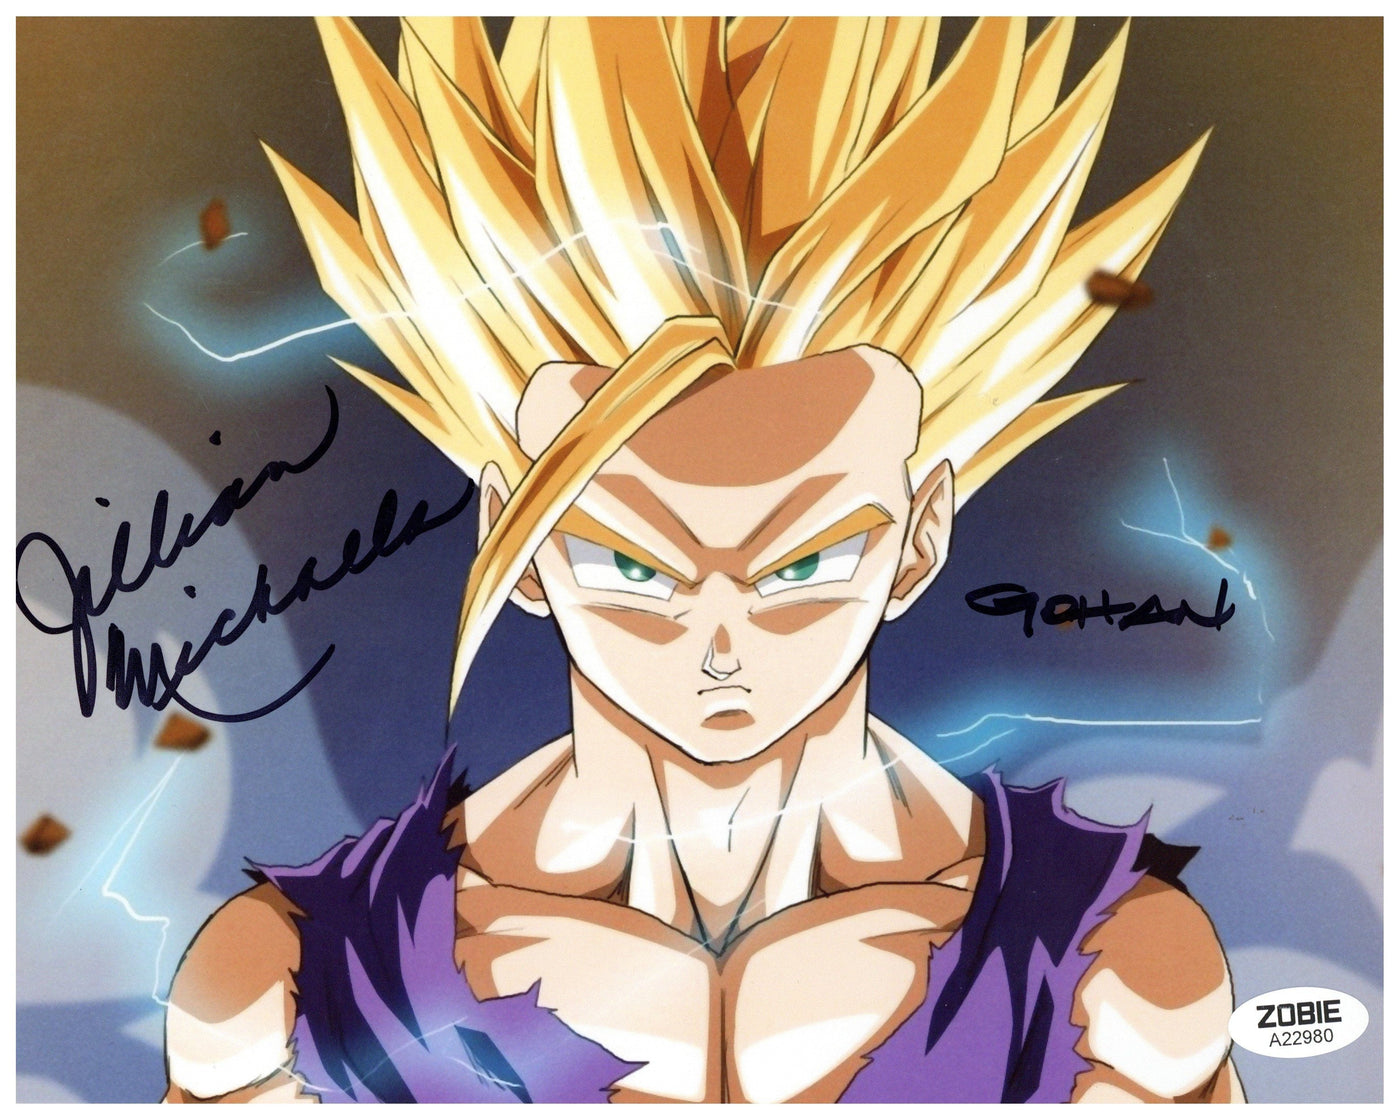 Jillian Michaels Signed 8x10 Photo Dragon Ball Z Gohan Autographed Zobie COA #2